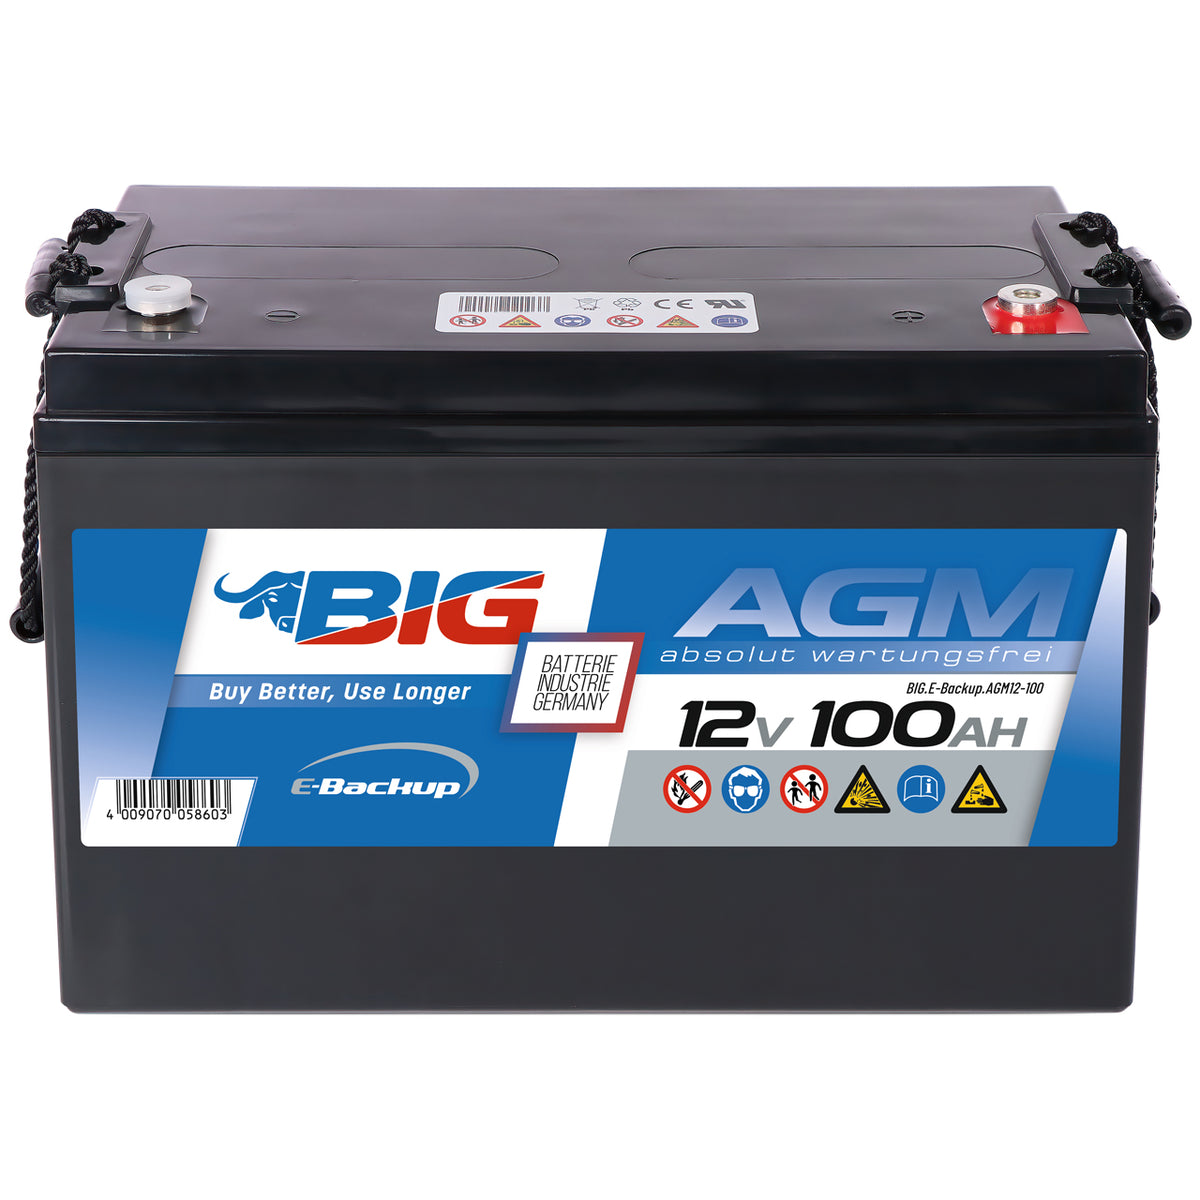 BIG E-Backup AGM 12V 100Ah